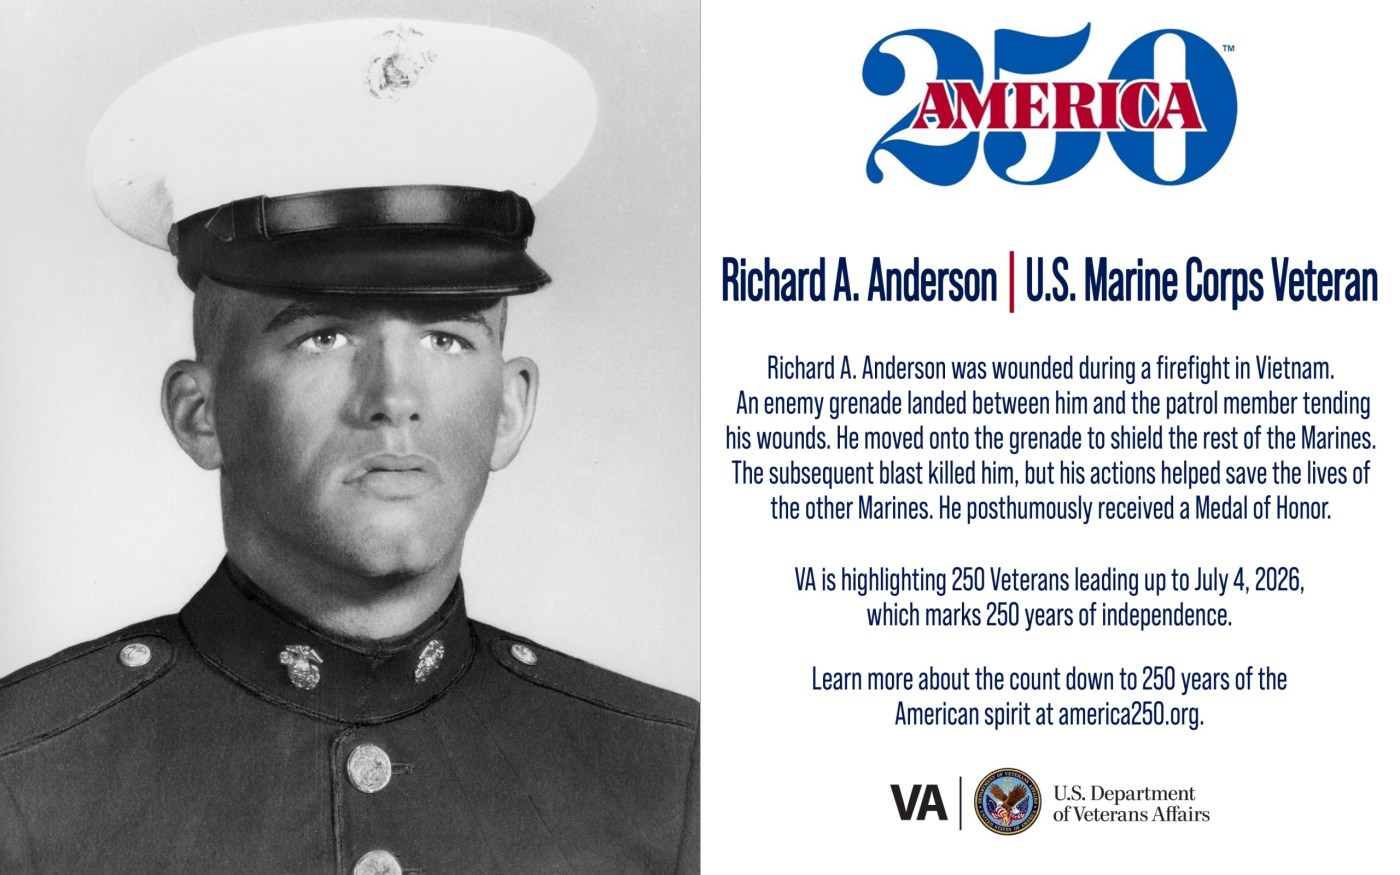 America250: Marine Corps Veteran Richard A. Anderson